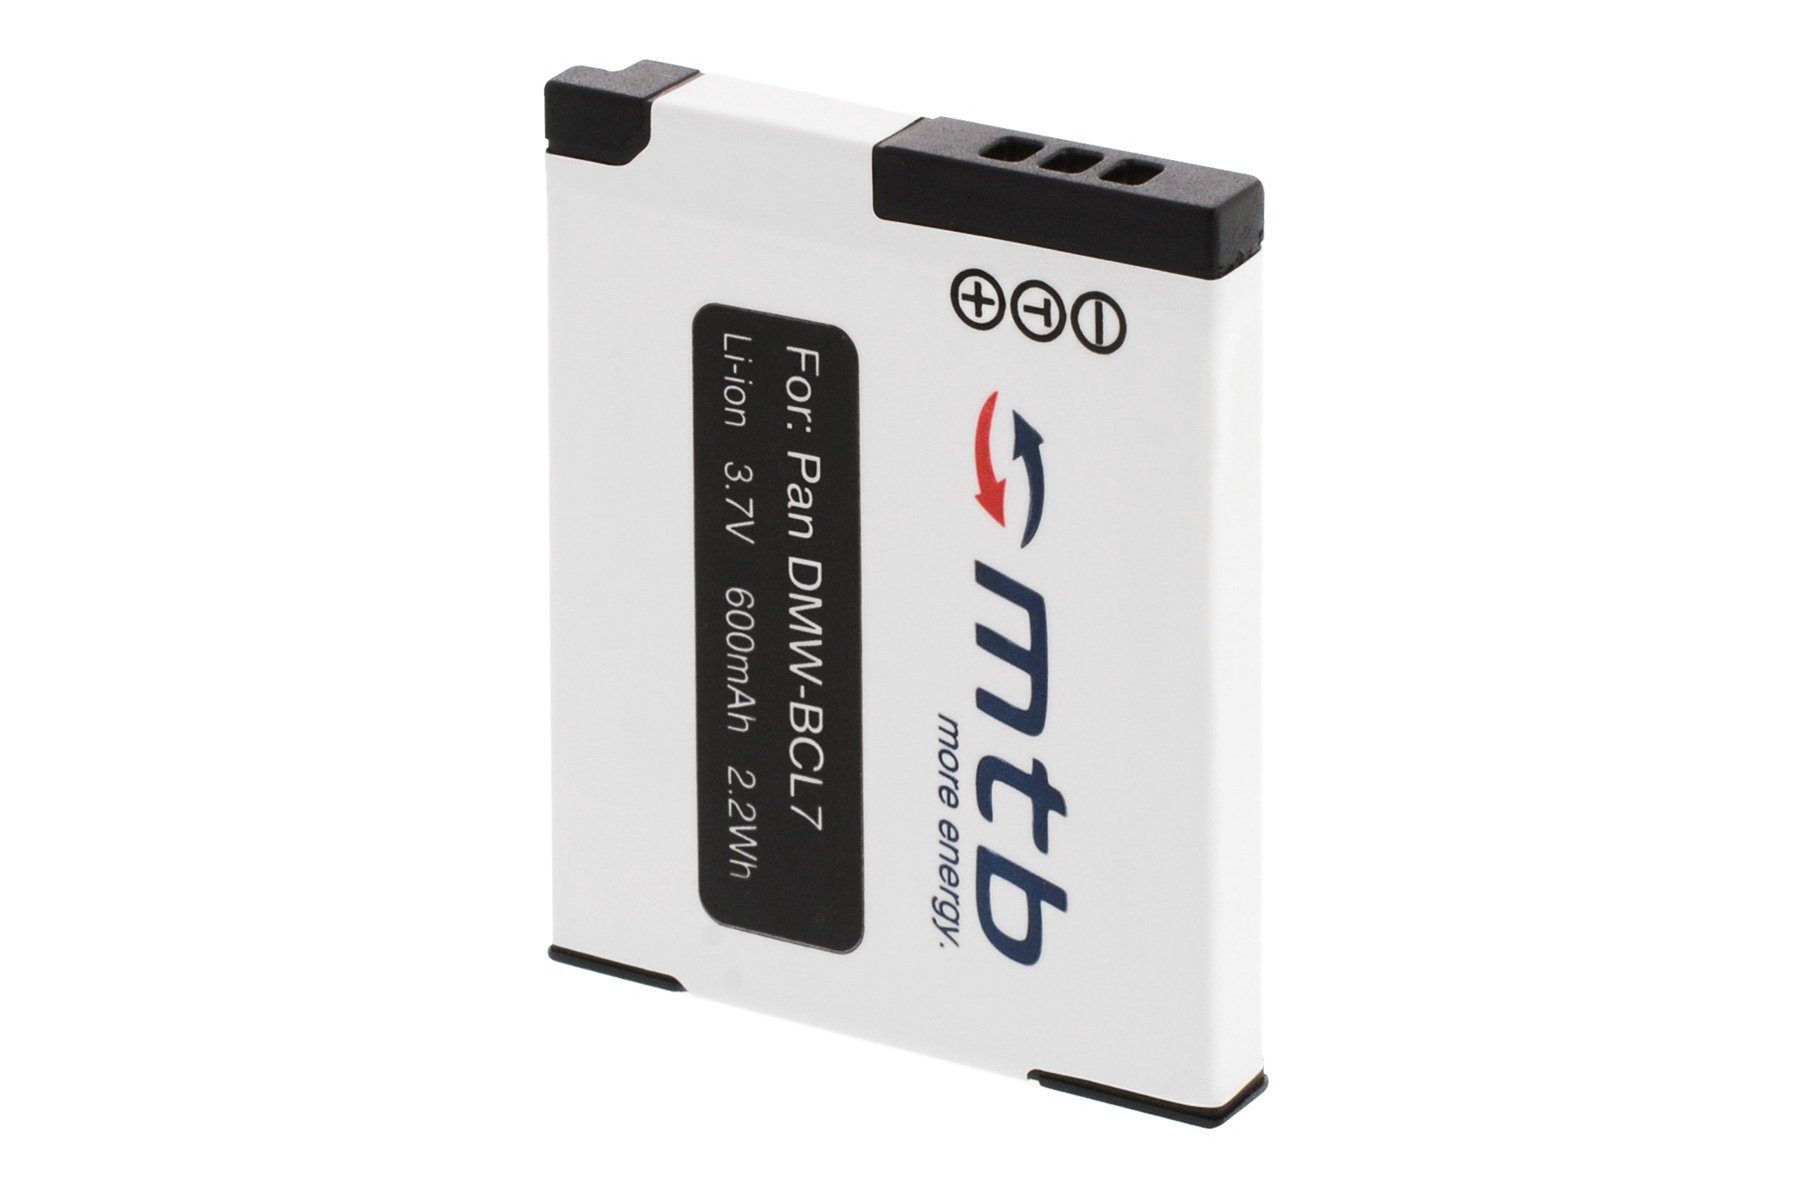 DMC-SZ3, XS3… FH10, Akku-Typ passend (3,7 / Kamera-Akku / FS50 Lumix DMC-XS1, Lumix [BAT-373 mtb SZ8, DMW-BCL7 V), für: 600 Lumix Li-Ion] more Panasonic mit SZ9, Panasonic DMC-F5, - mAh energy kompatibel SZ10